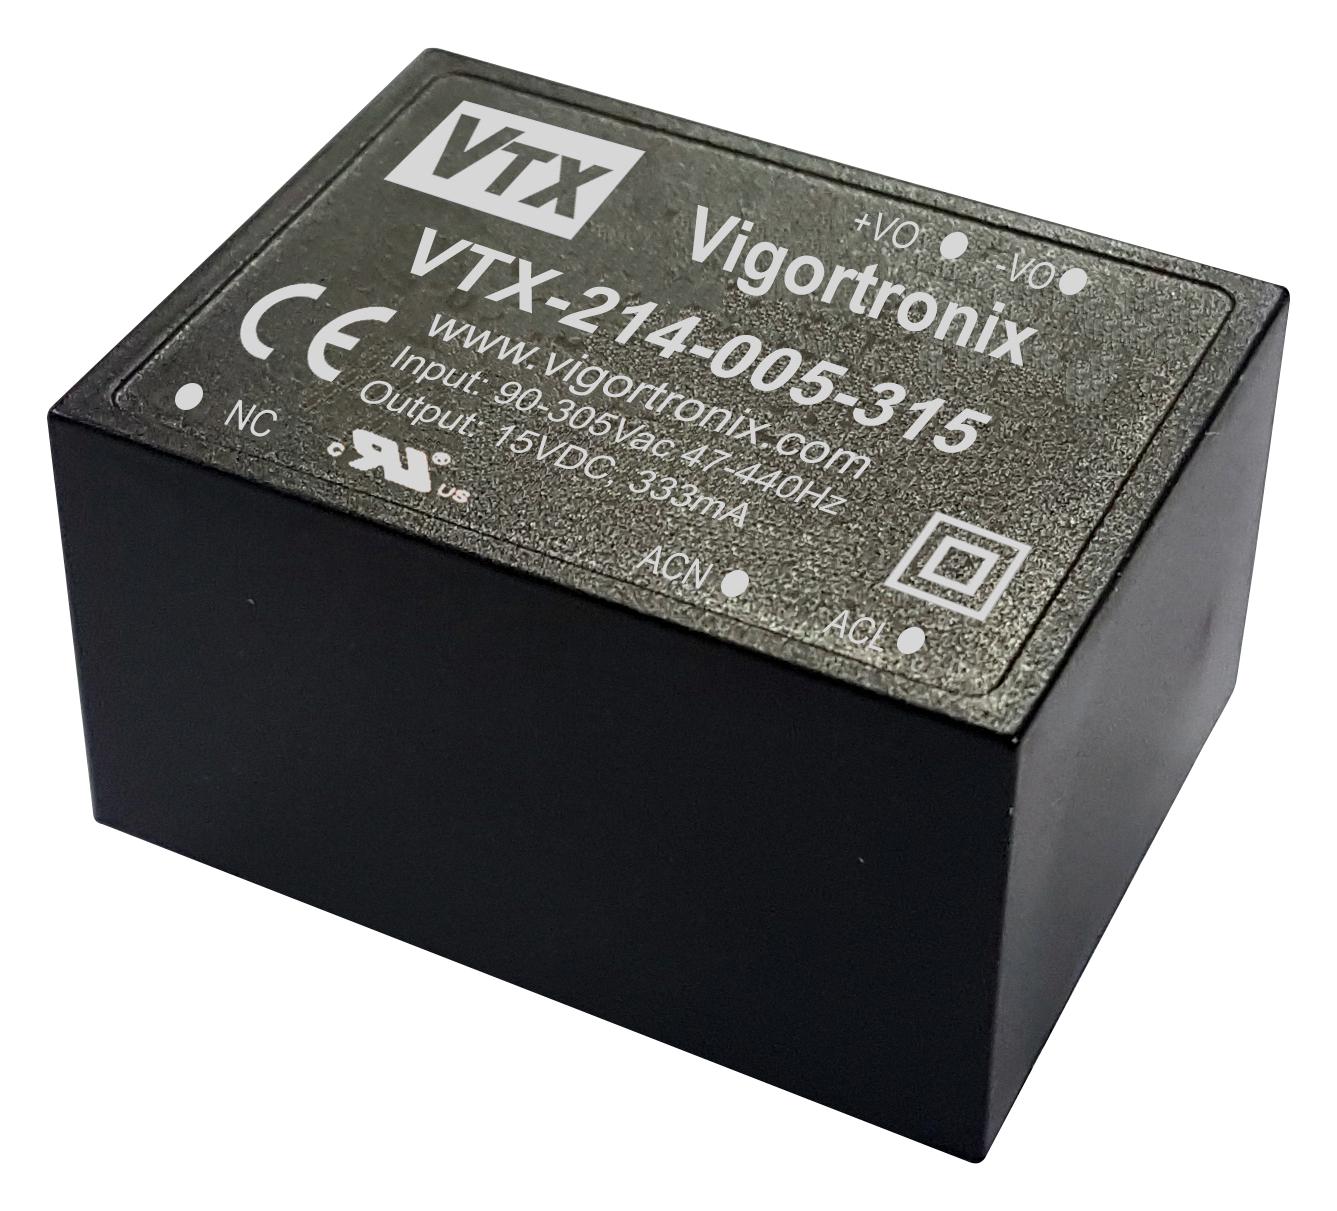 VTX-214-005-305